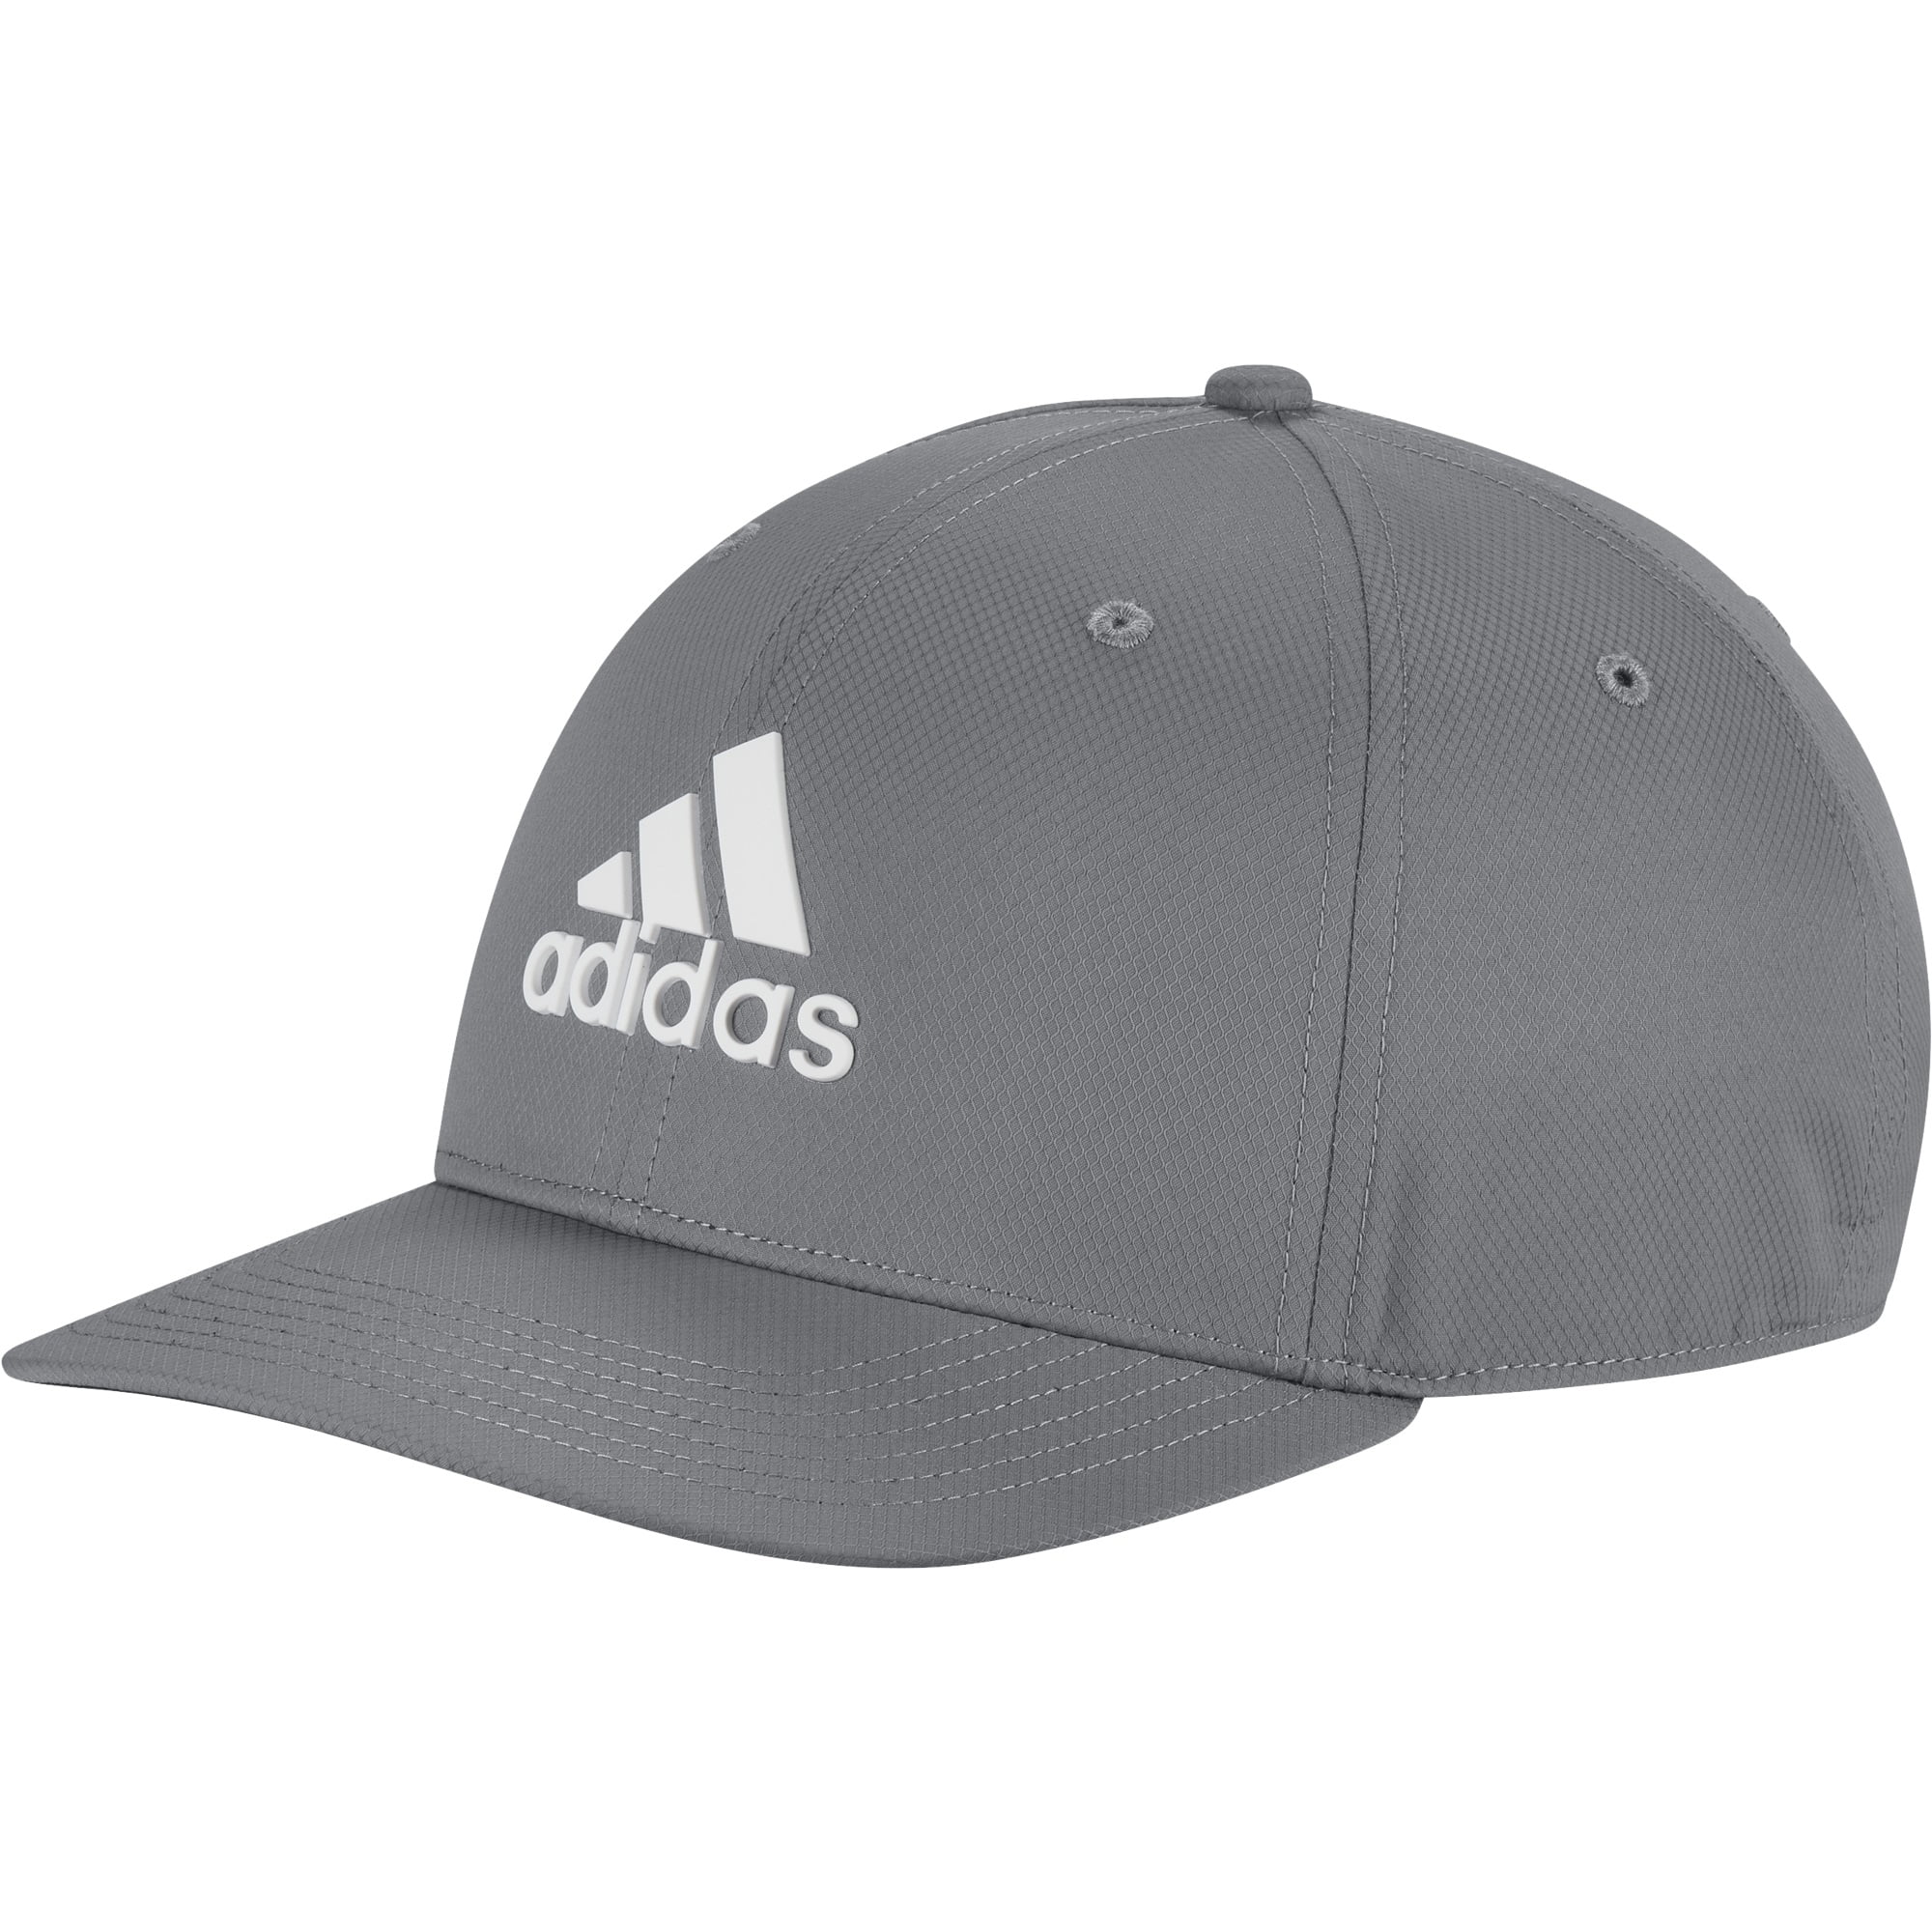 Adidas Golf 3-Stripes Tour Snapback Hat Gray Three - Walmart.com